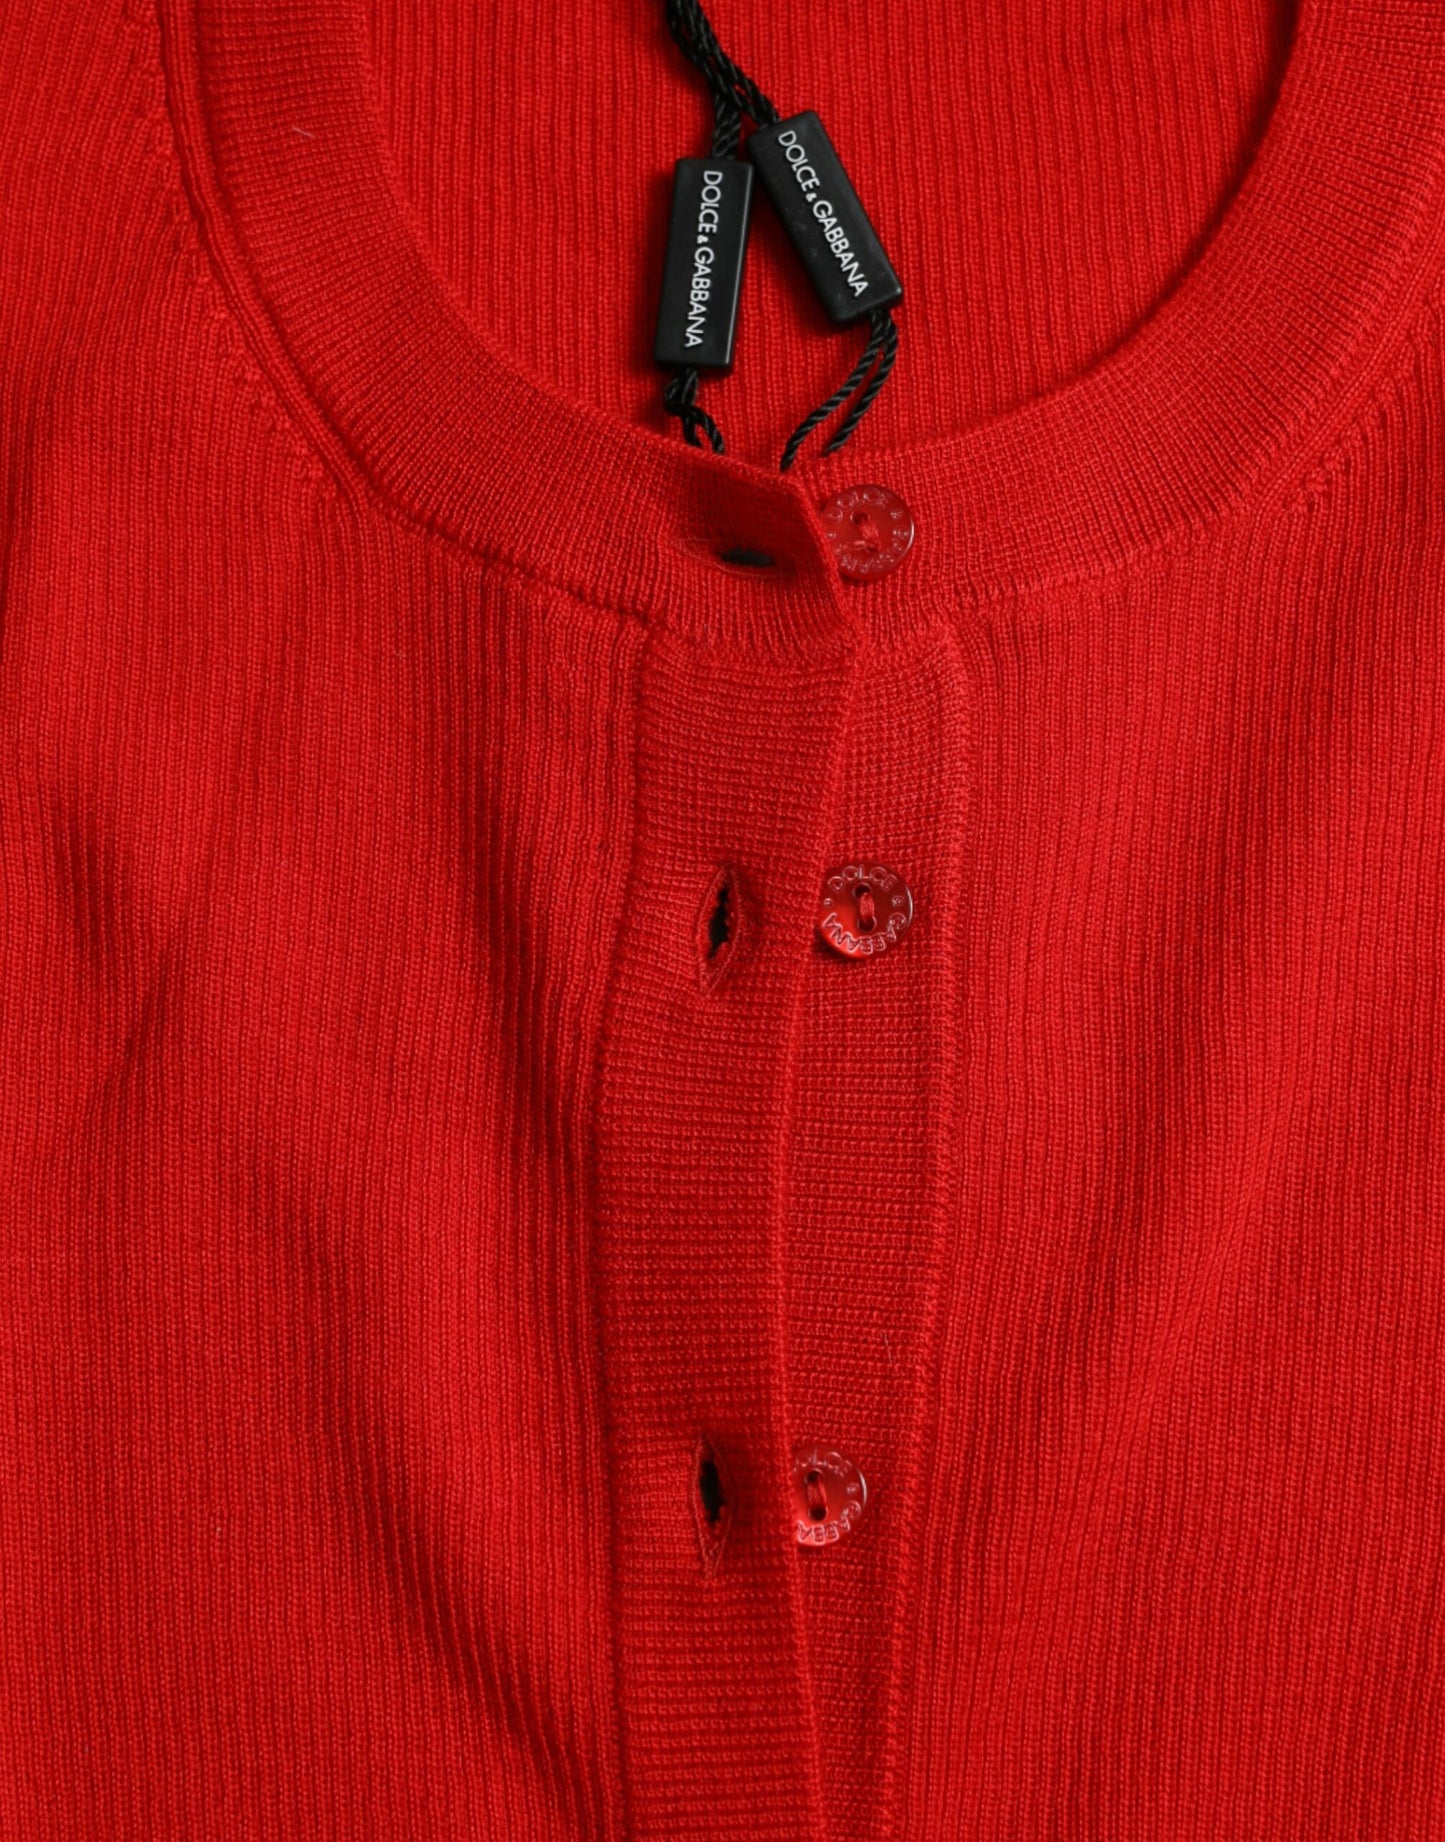 Dolce & Gabbana Elegant Red Cashmere-Silk Cardigan